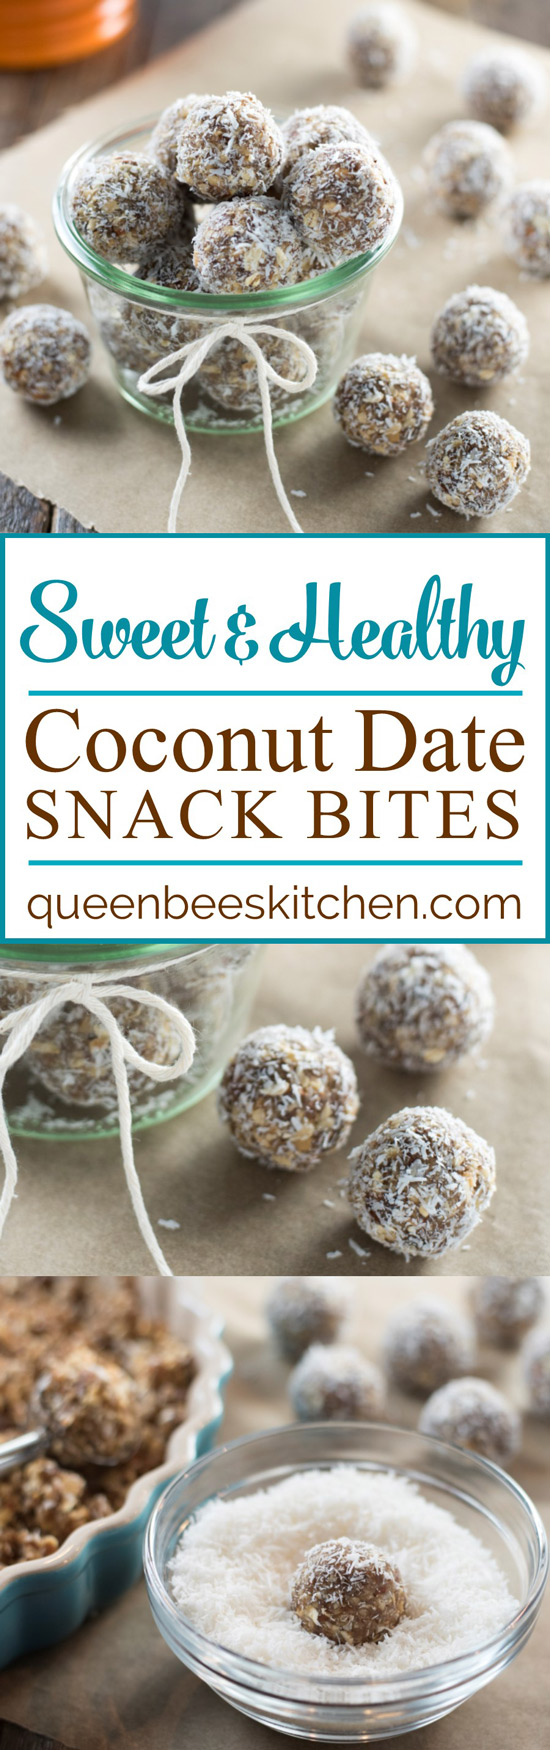 Coconut Date Snack Bites Pinterest